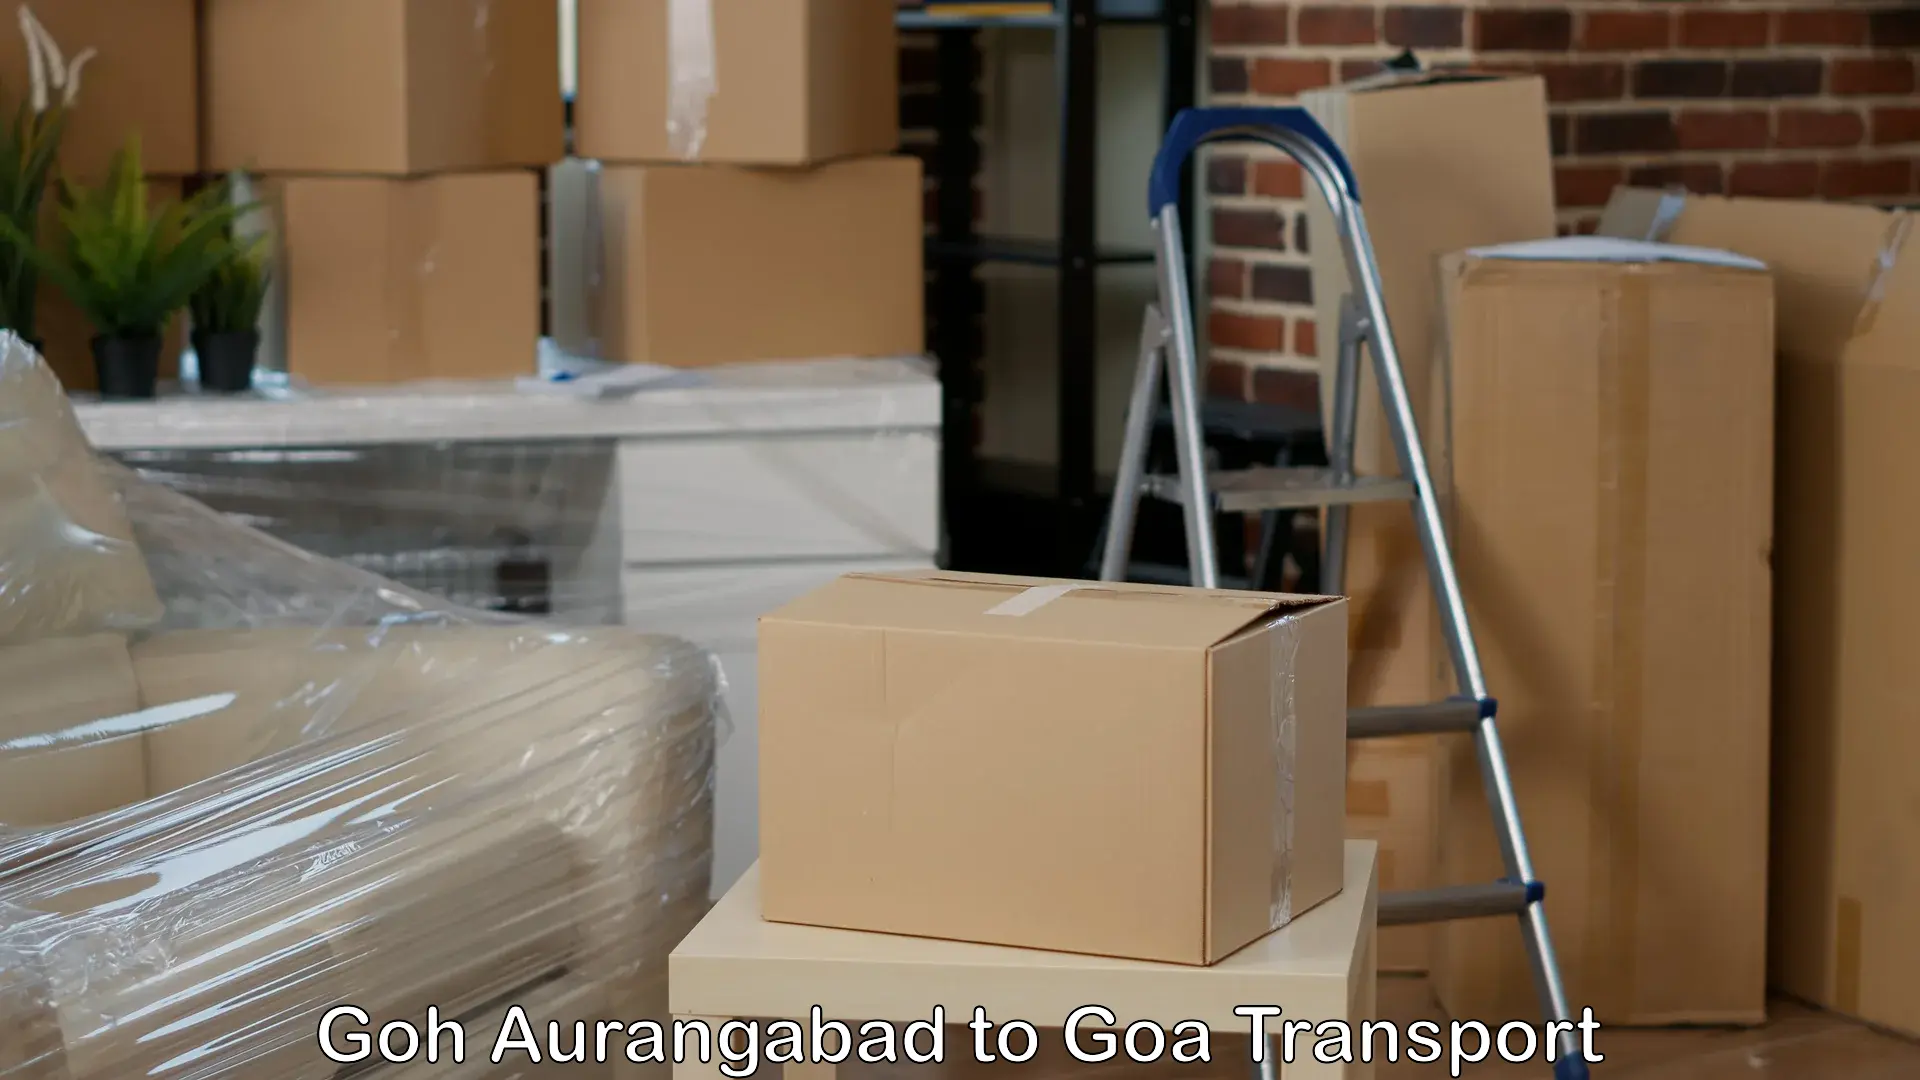 Container transport service Goh Aurangabad to Goa University